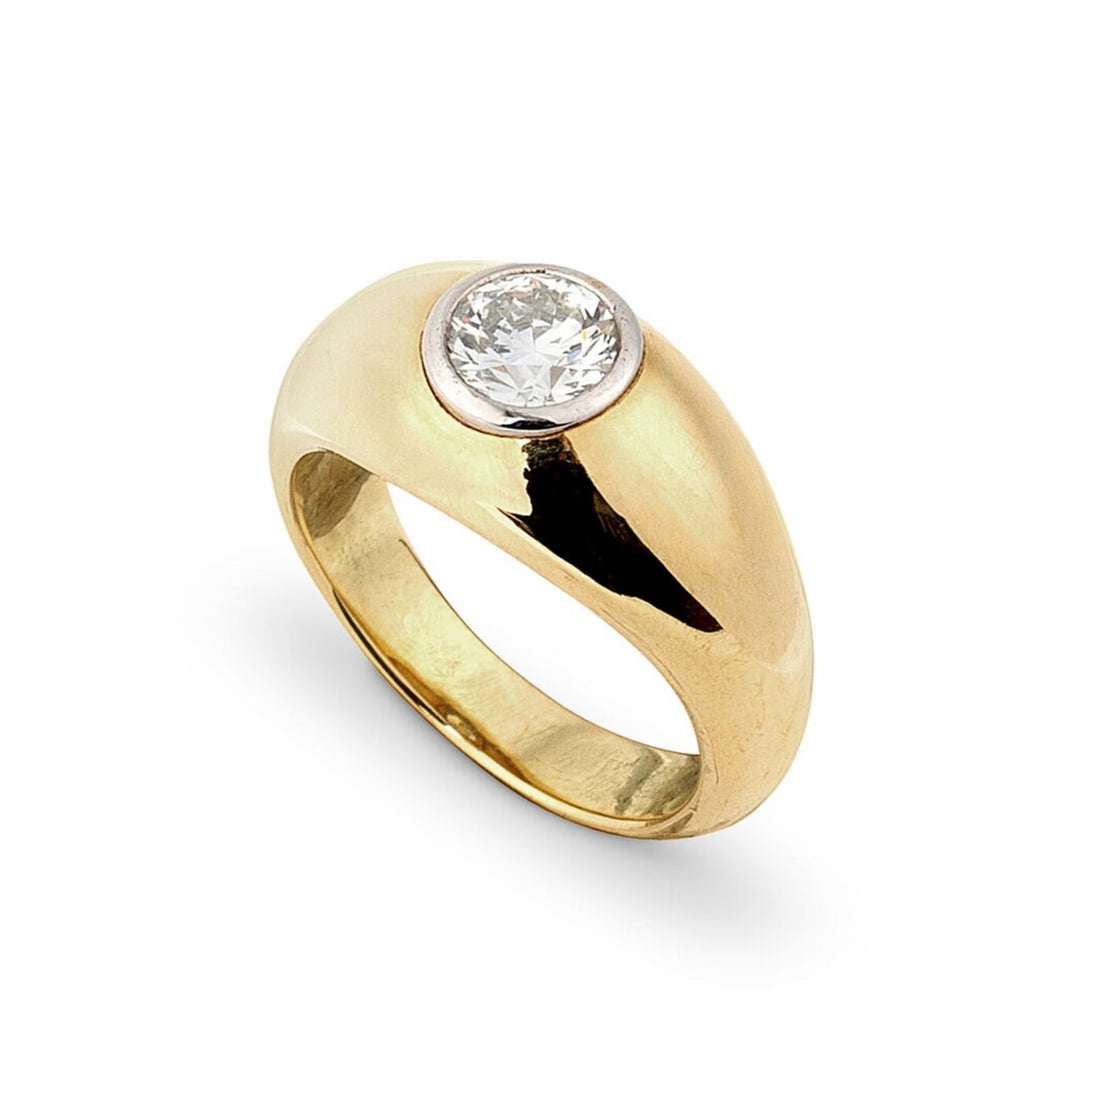  Heavy Gold & Diamond Bombé Ring by Jessie Thomas | The Cut London